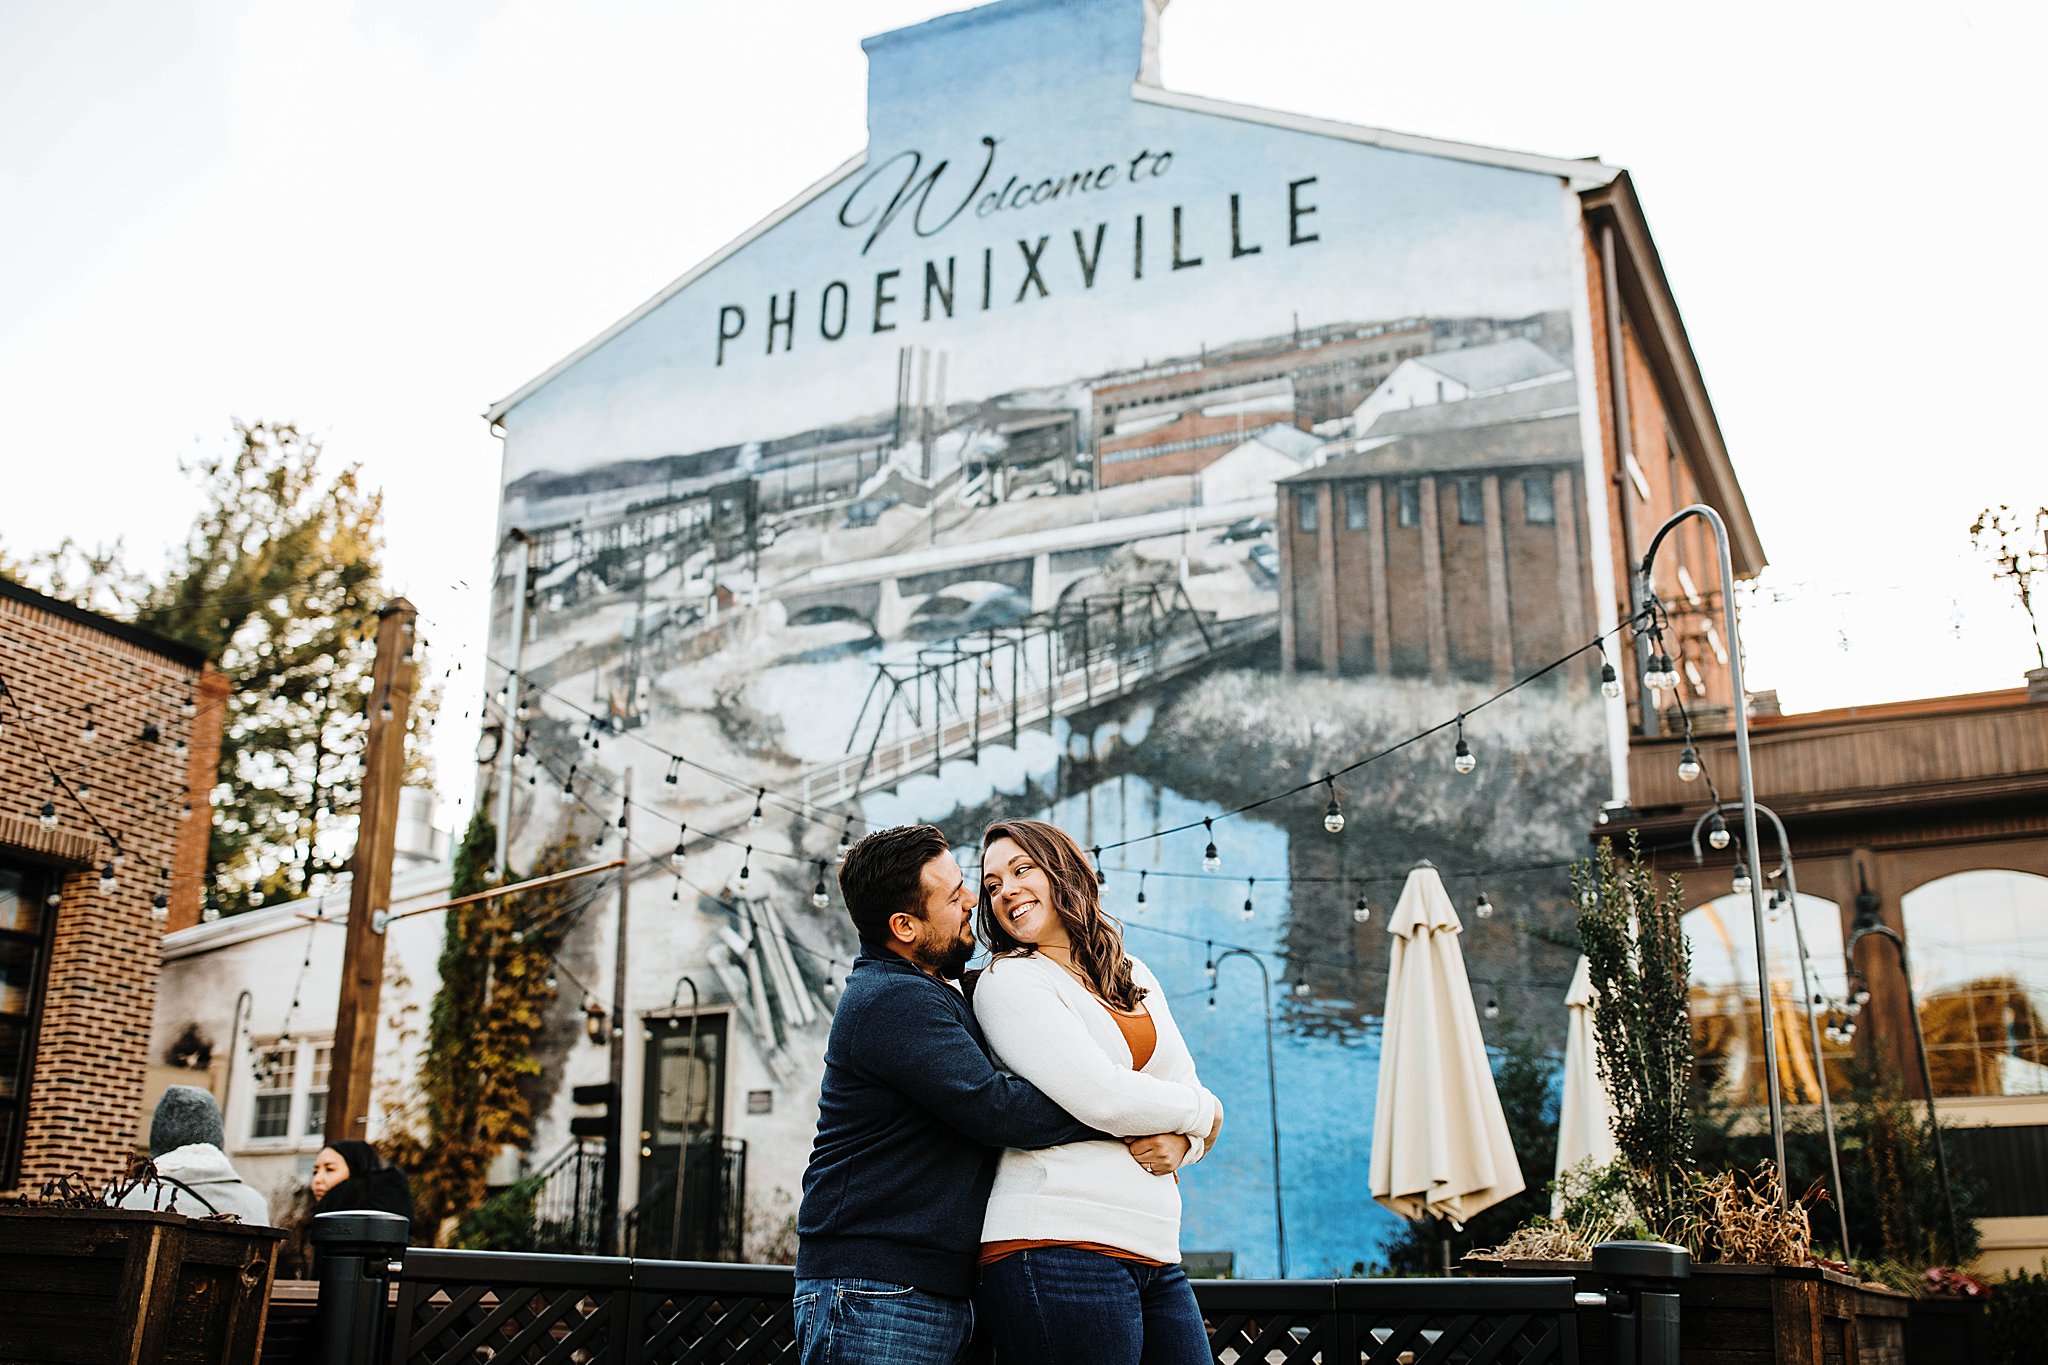 phoenixville pa mural